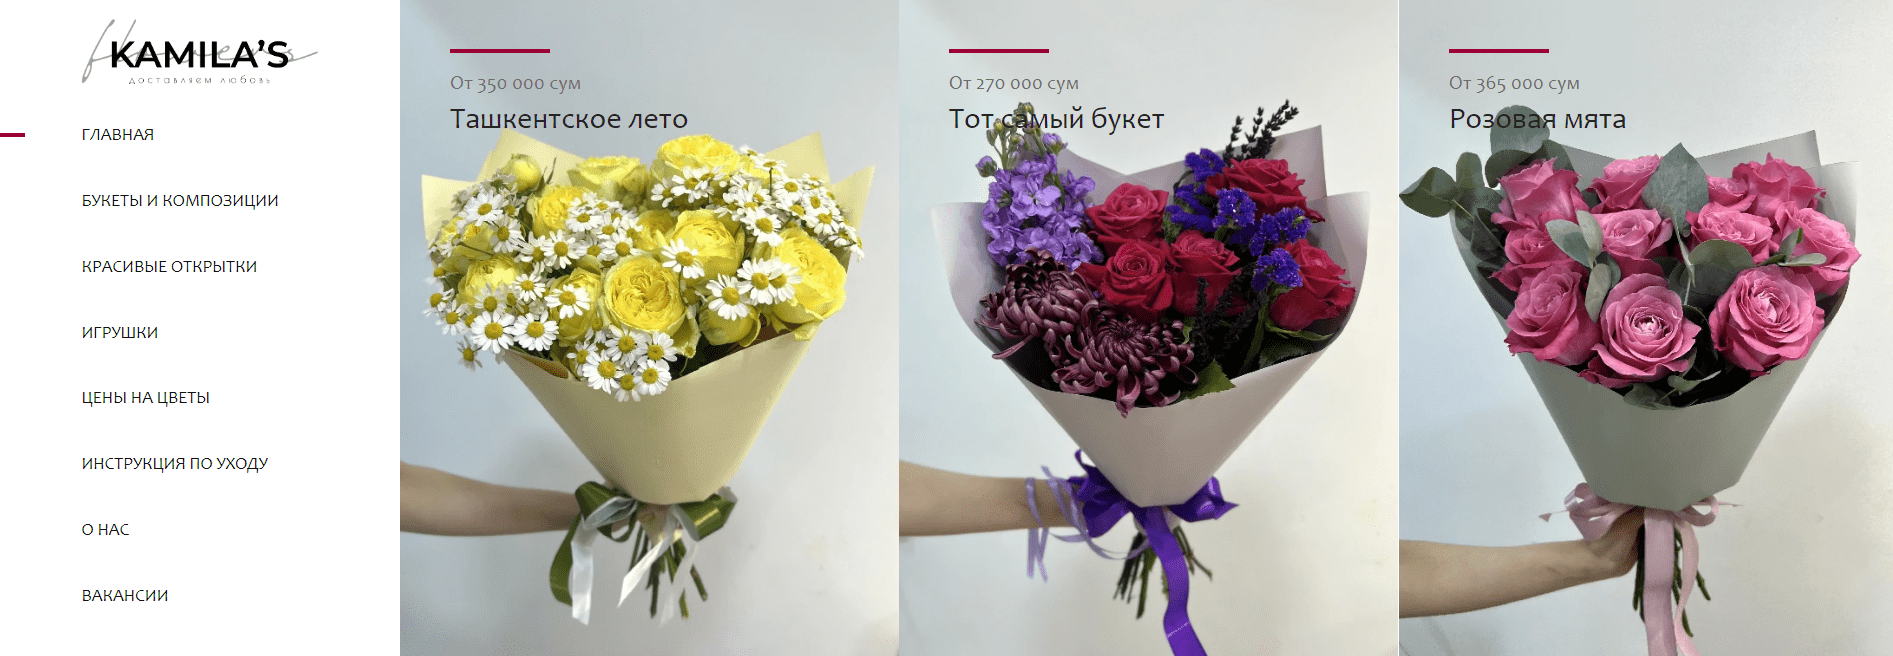 Kamila's Flowers (kamilas.uz) - официальный сайт